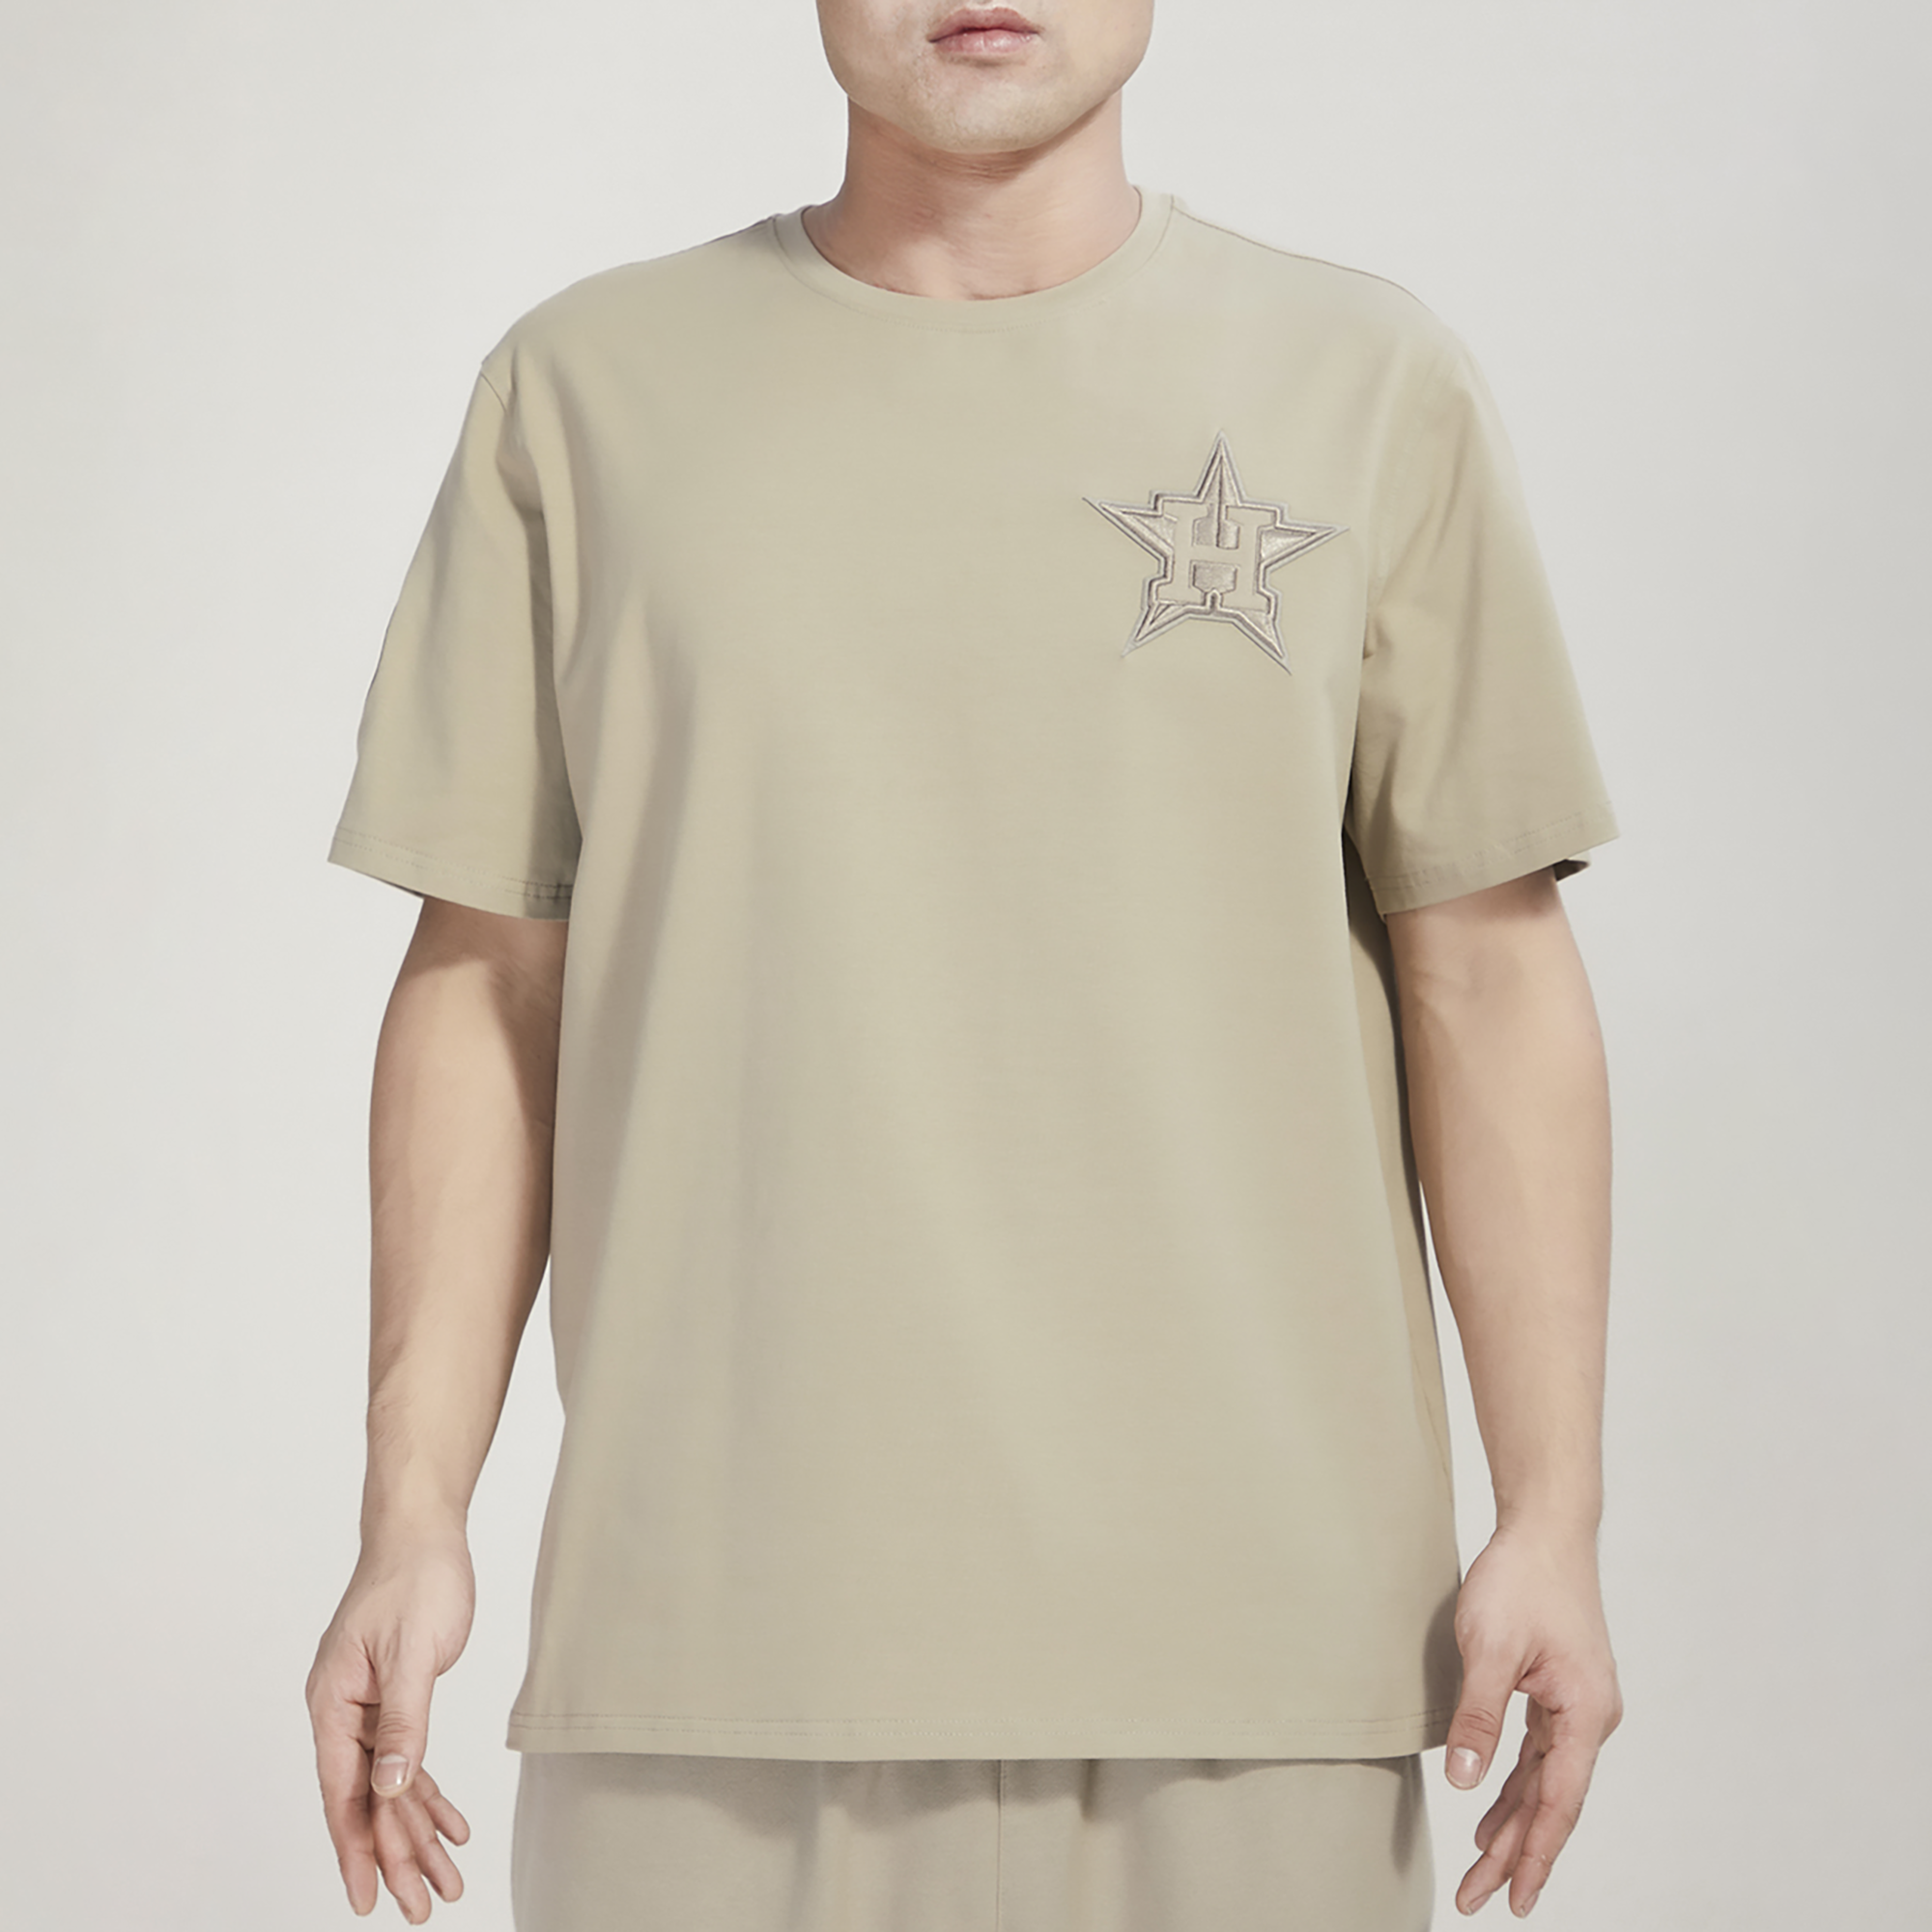 Houston Astros Pro Standard Taping T-Shirt - Navy/Orange